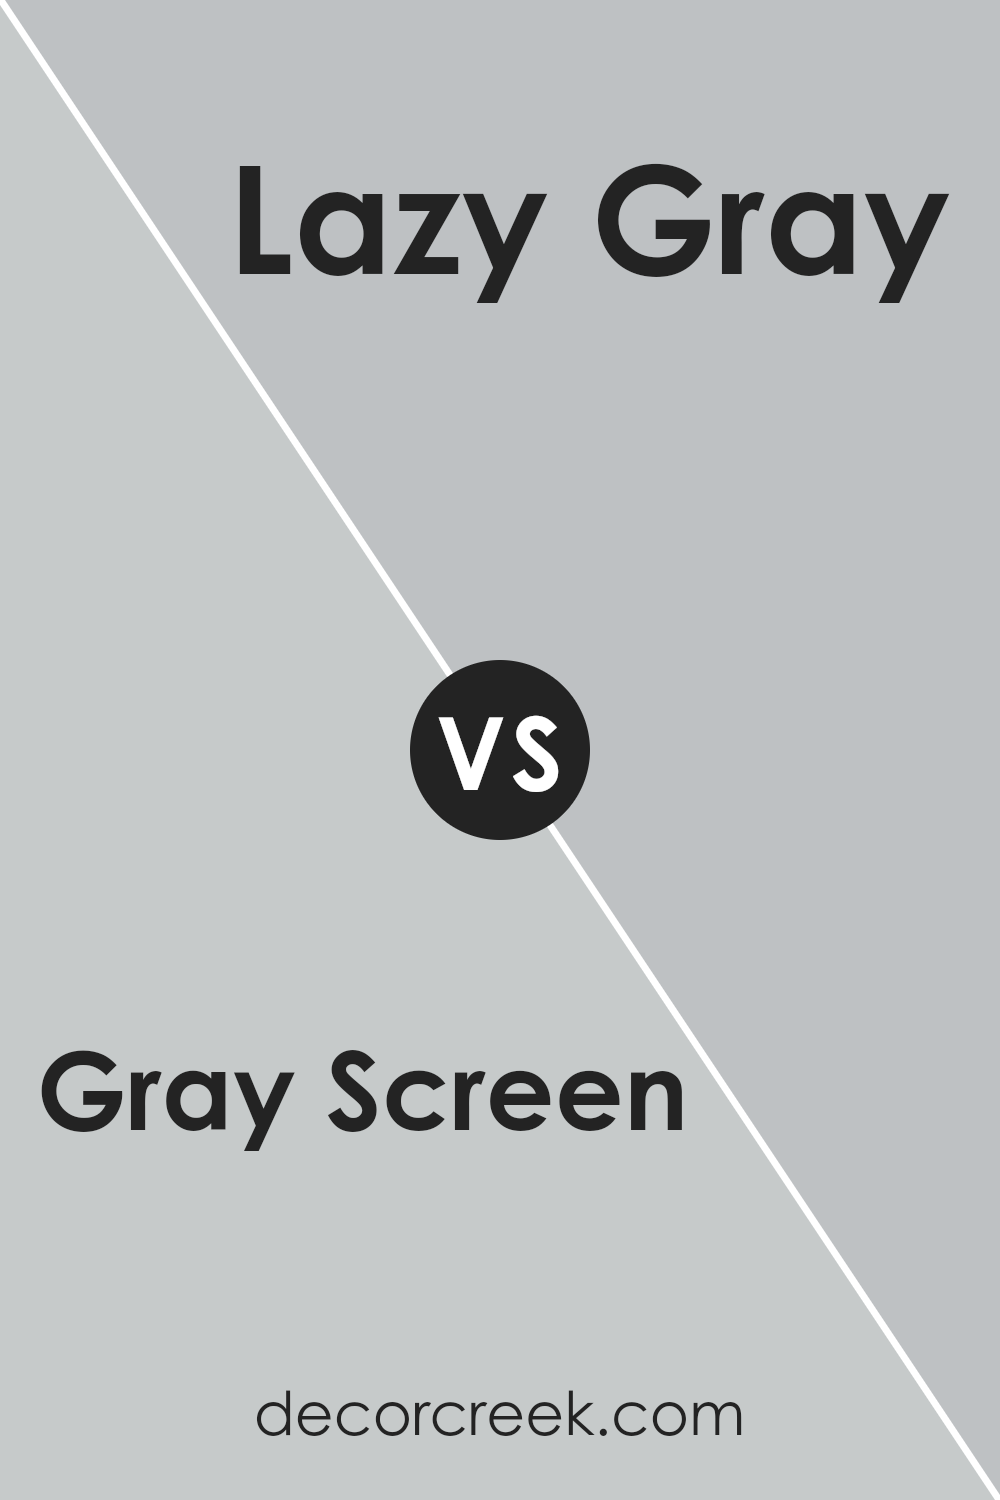 gray_screen_sw_7071_vs_lazy_gray_sw_6254